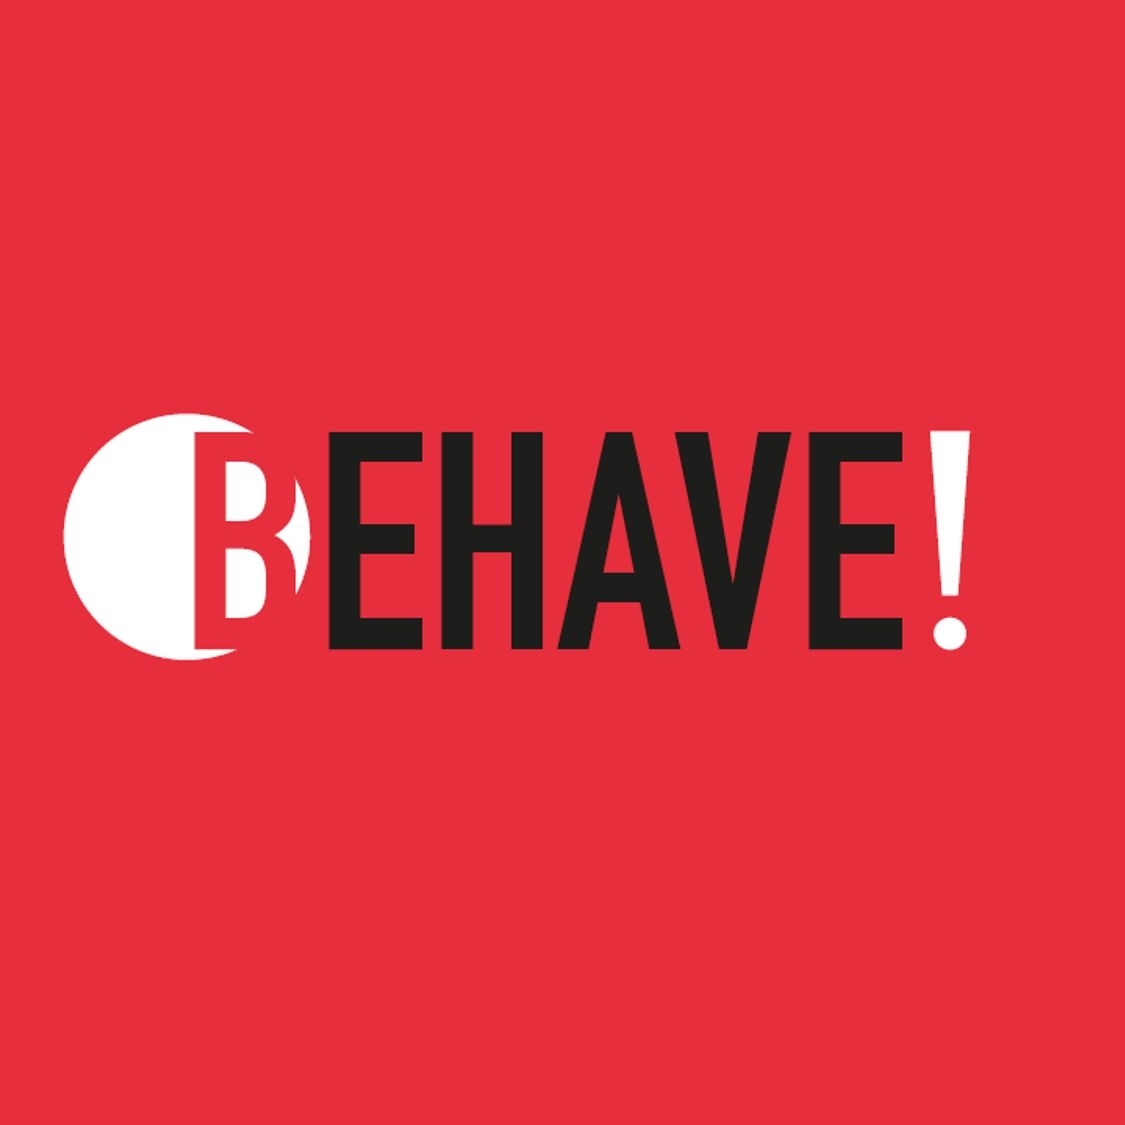 O Behave!